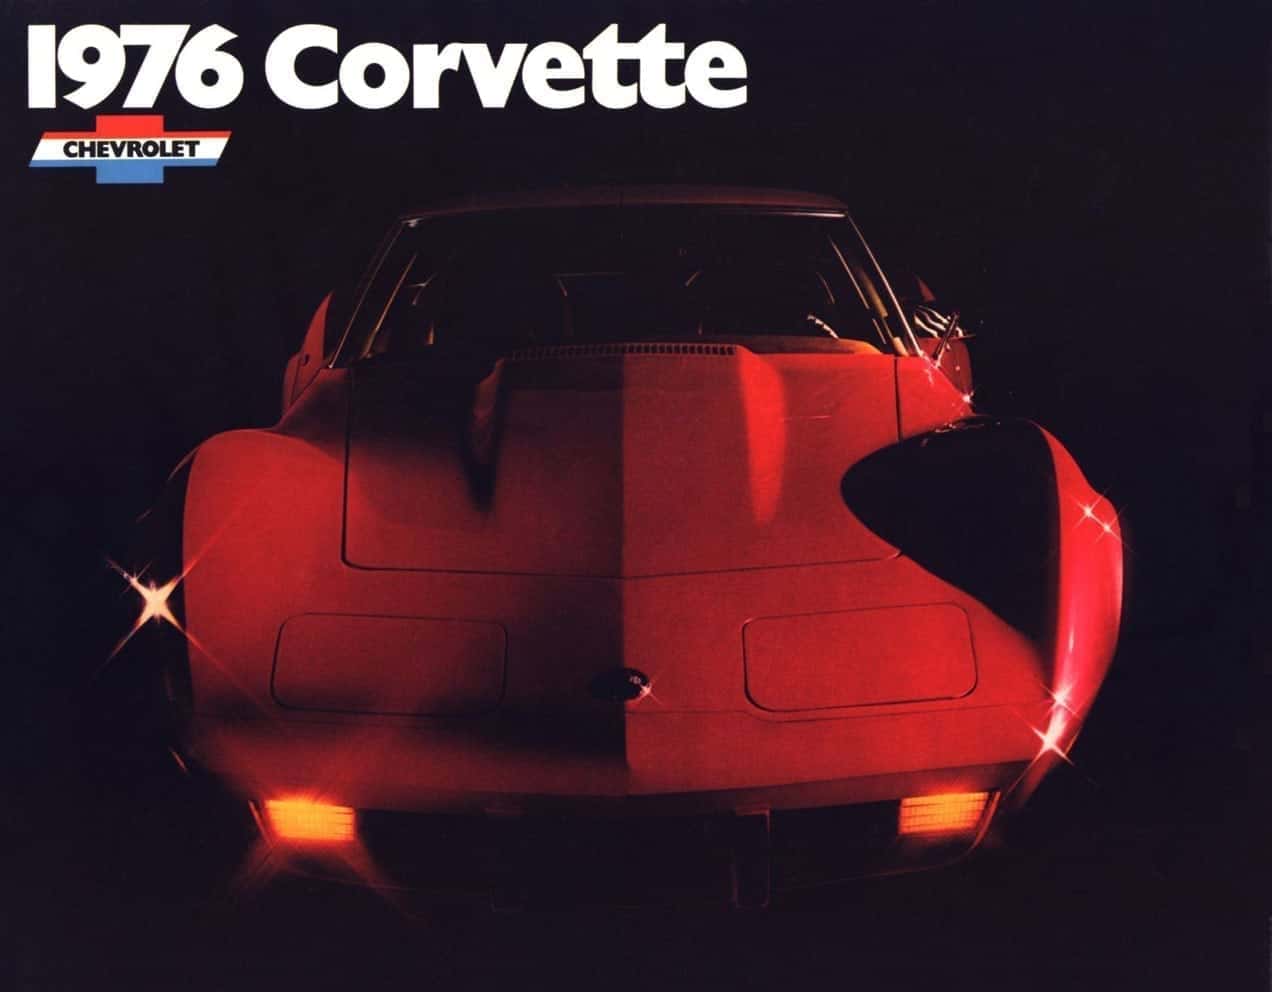 1976 Corvette Brochure Cover